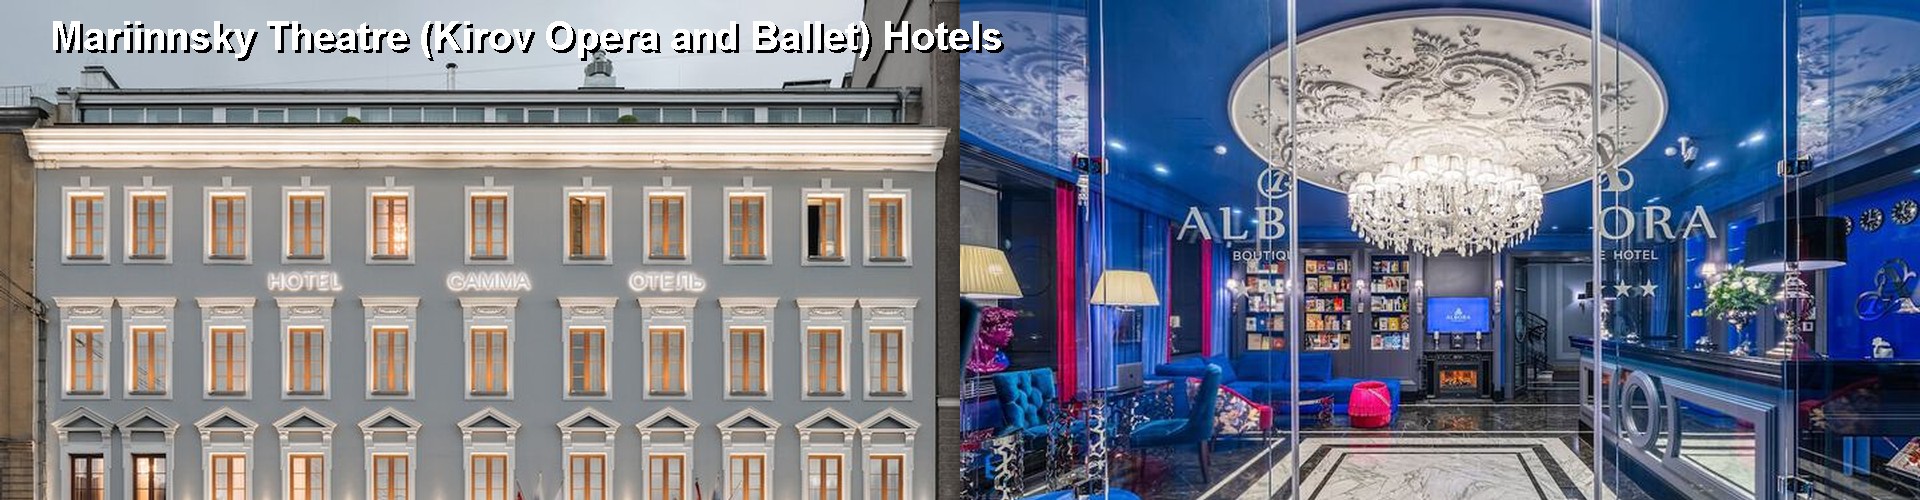 5 Best Hotels near Mariinnsky Theatre (Kirov Opera and Ballet)